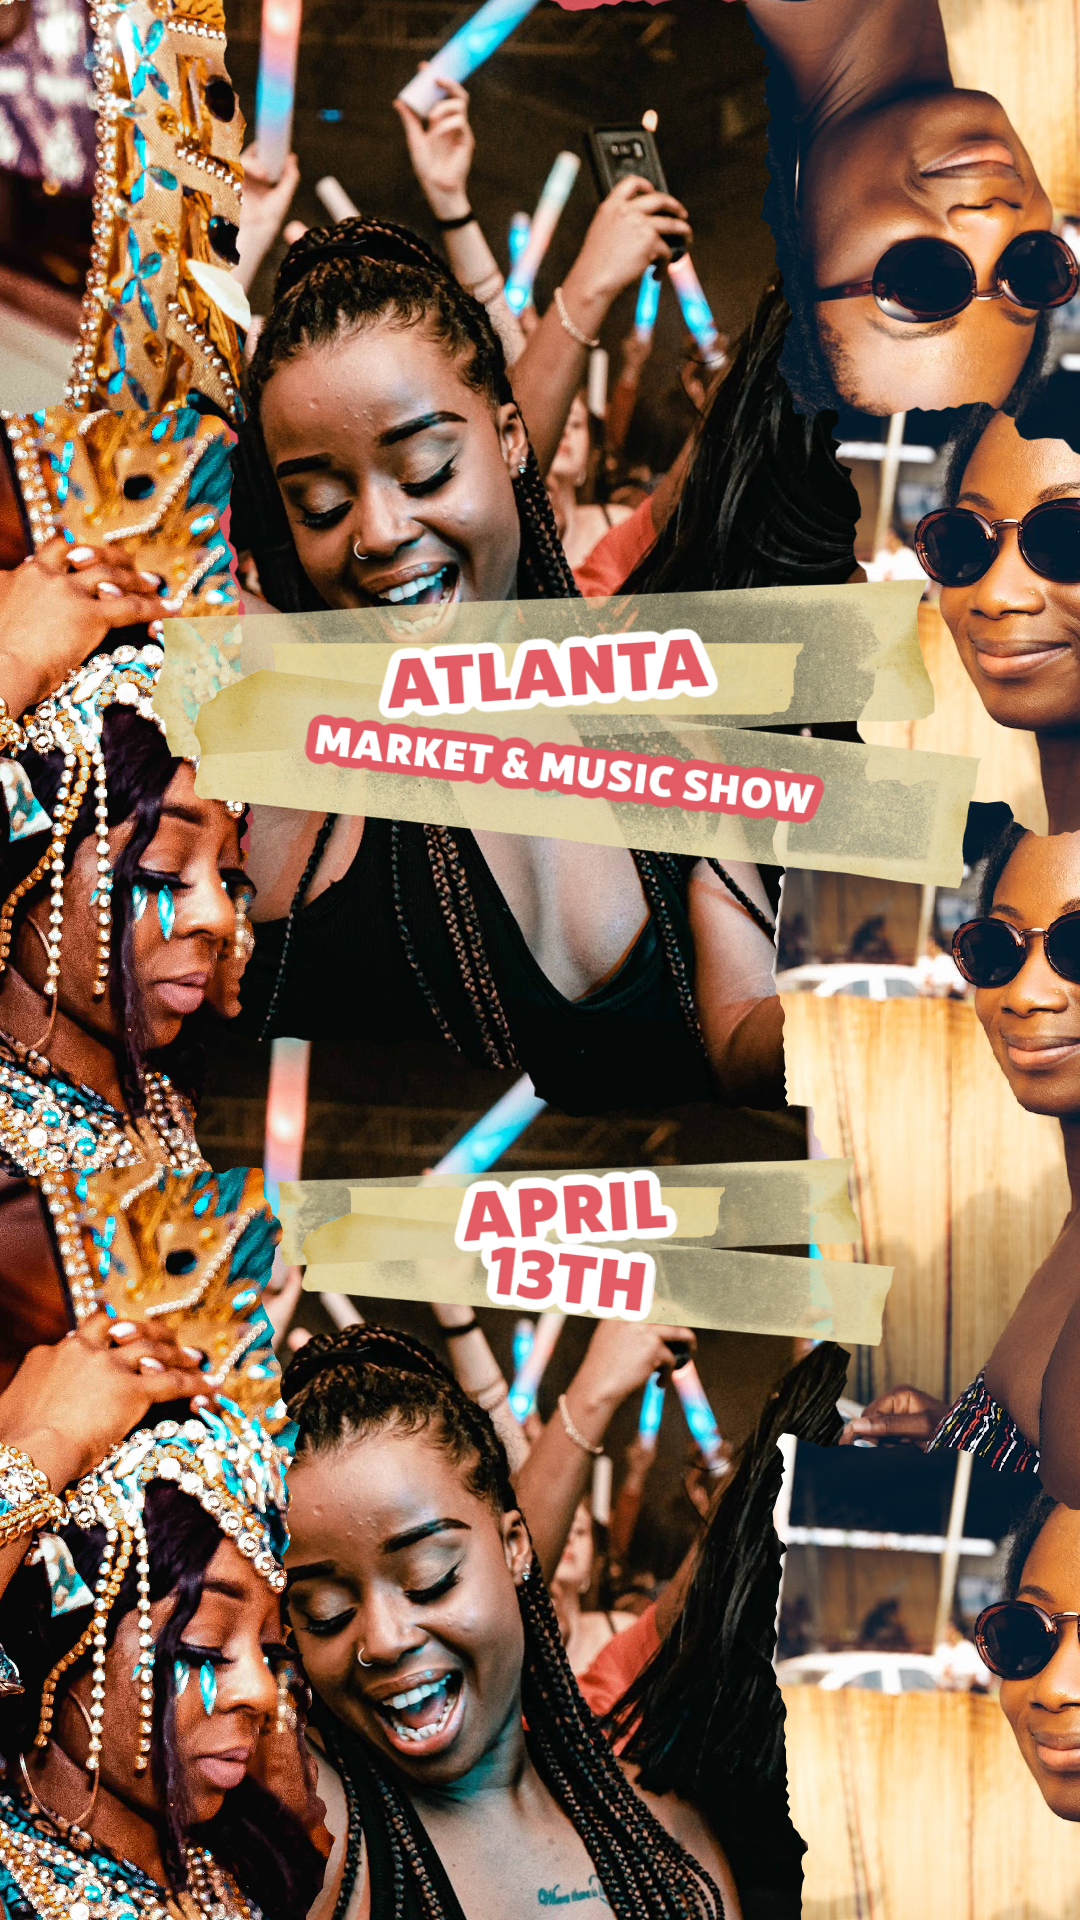 AfroSocaLove : Atlanta Party & BlackOwned Market (Feat Maga Stories & More) - Afro Soca Love Supply